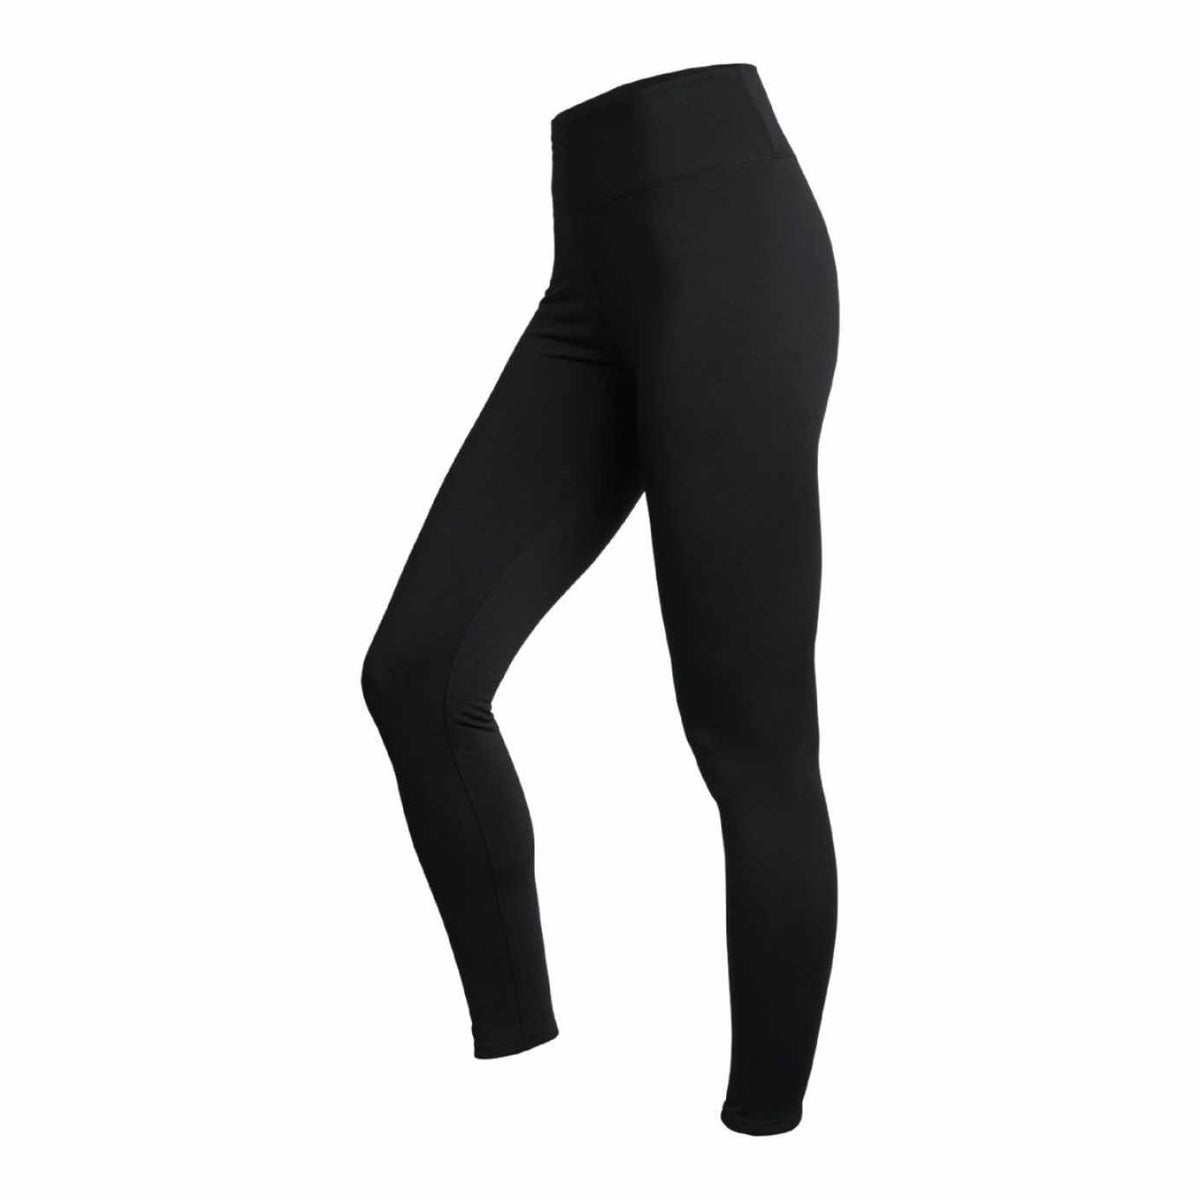 Rohnisch Ladies Thermo Zip Leggings in Black - Last Pair XS Only